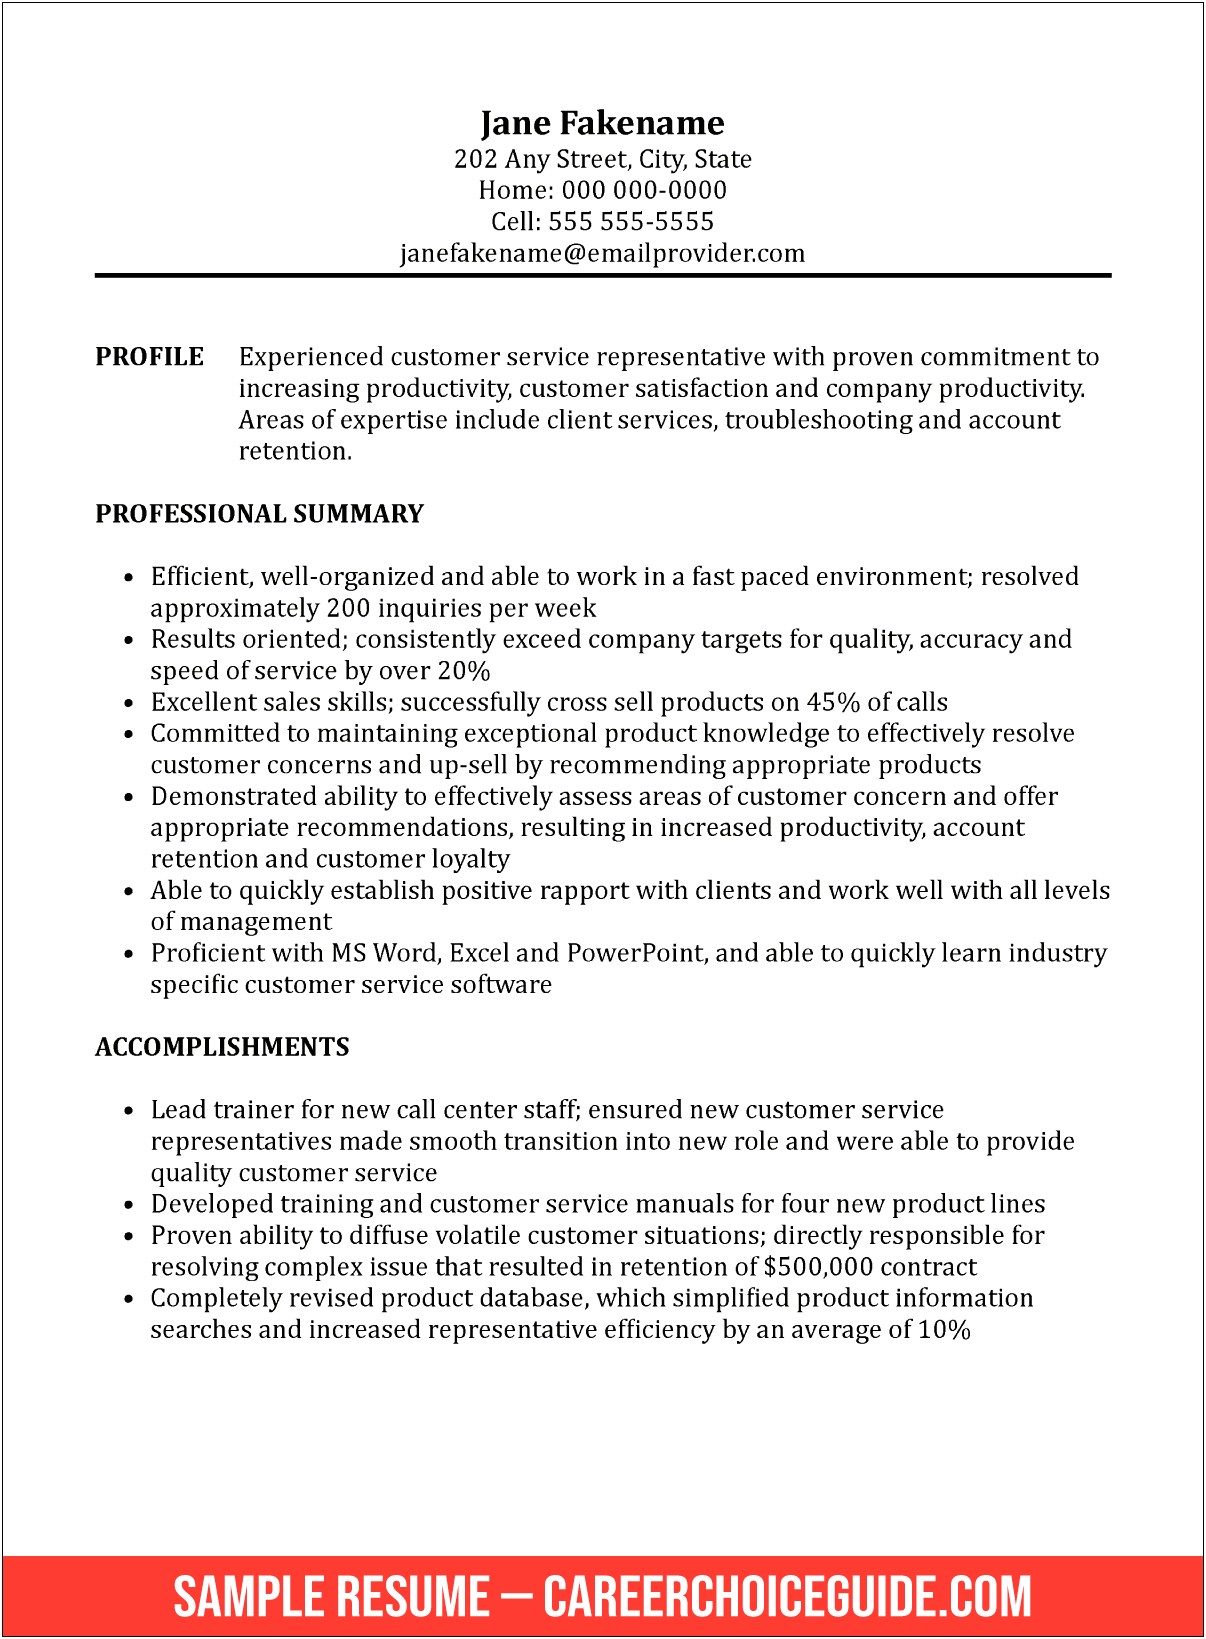 Sample Profile Summary For Resume